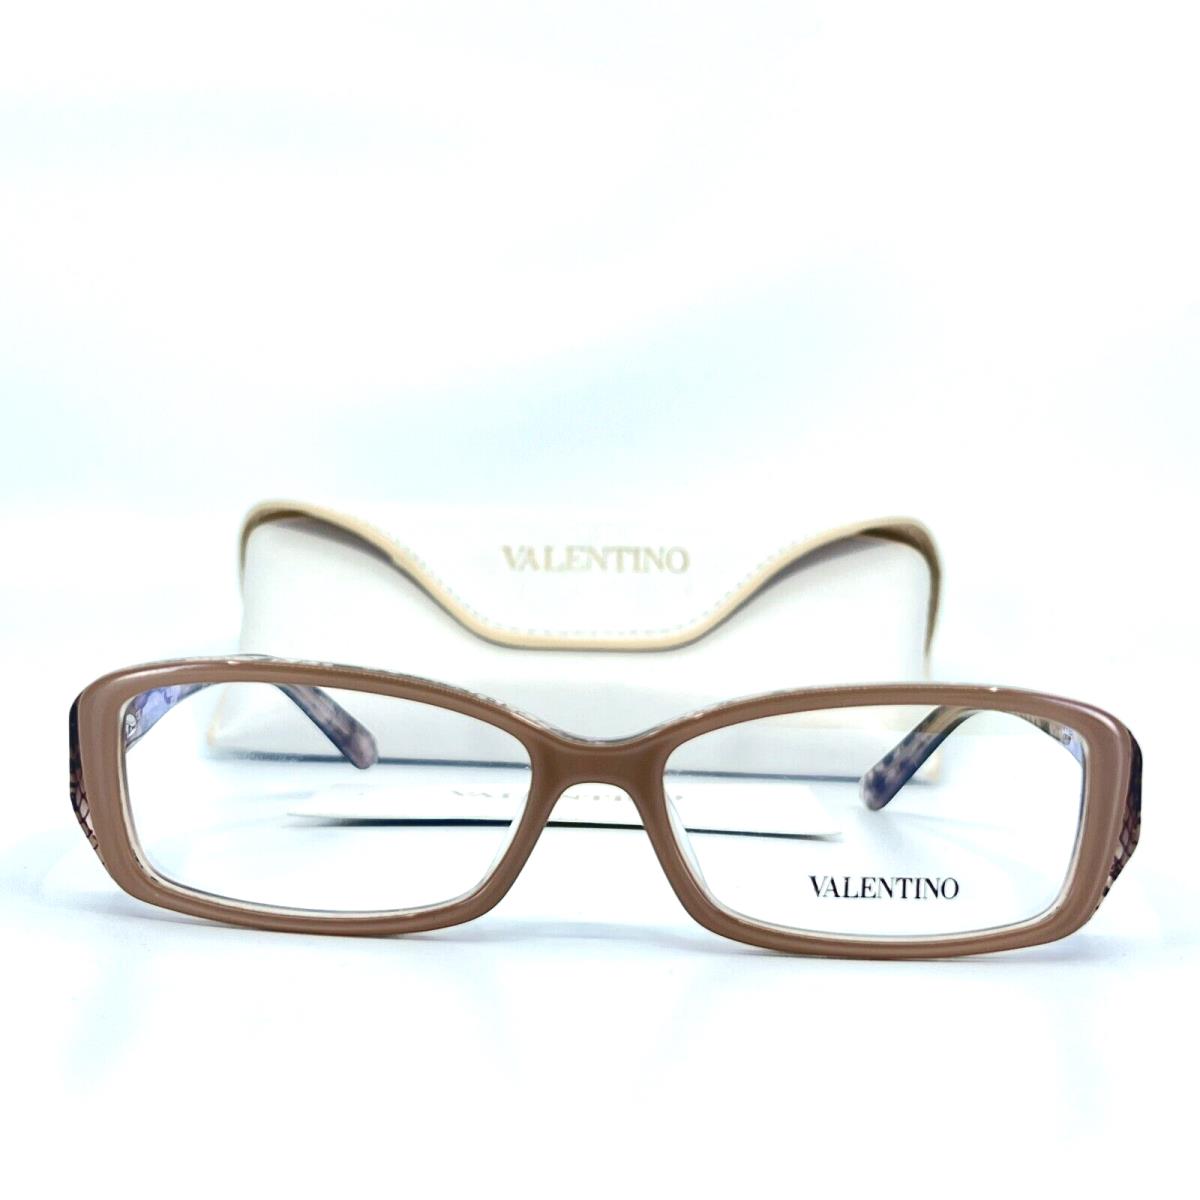 Valentino eyeglasses  - Brown Frame 0